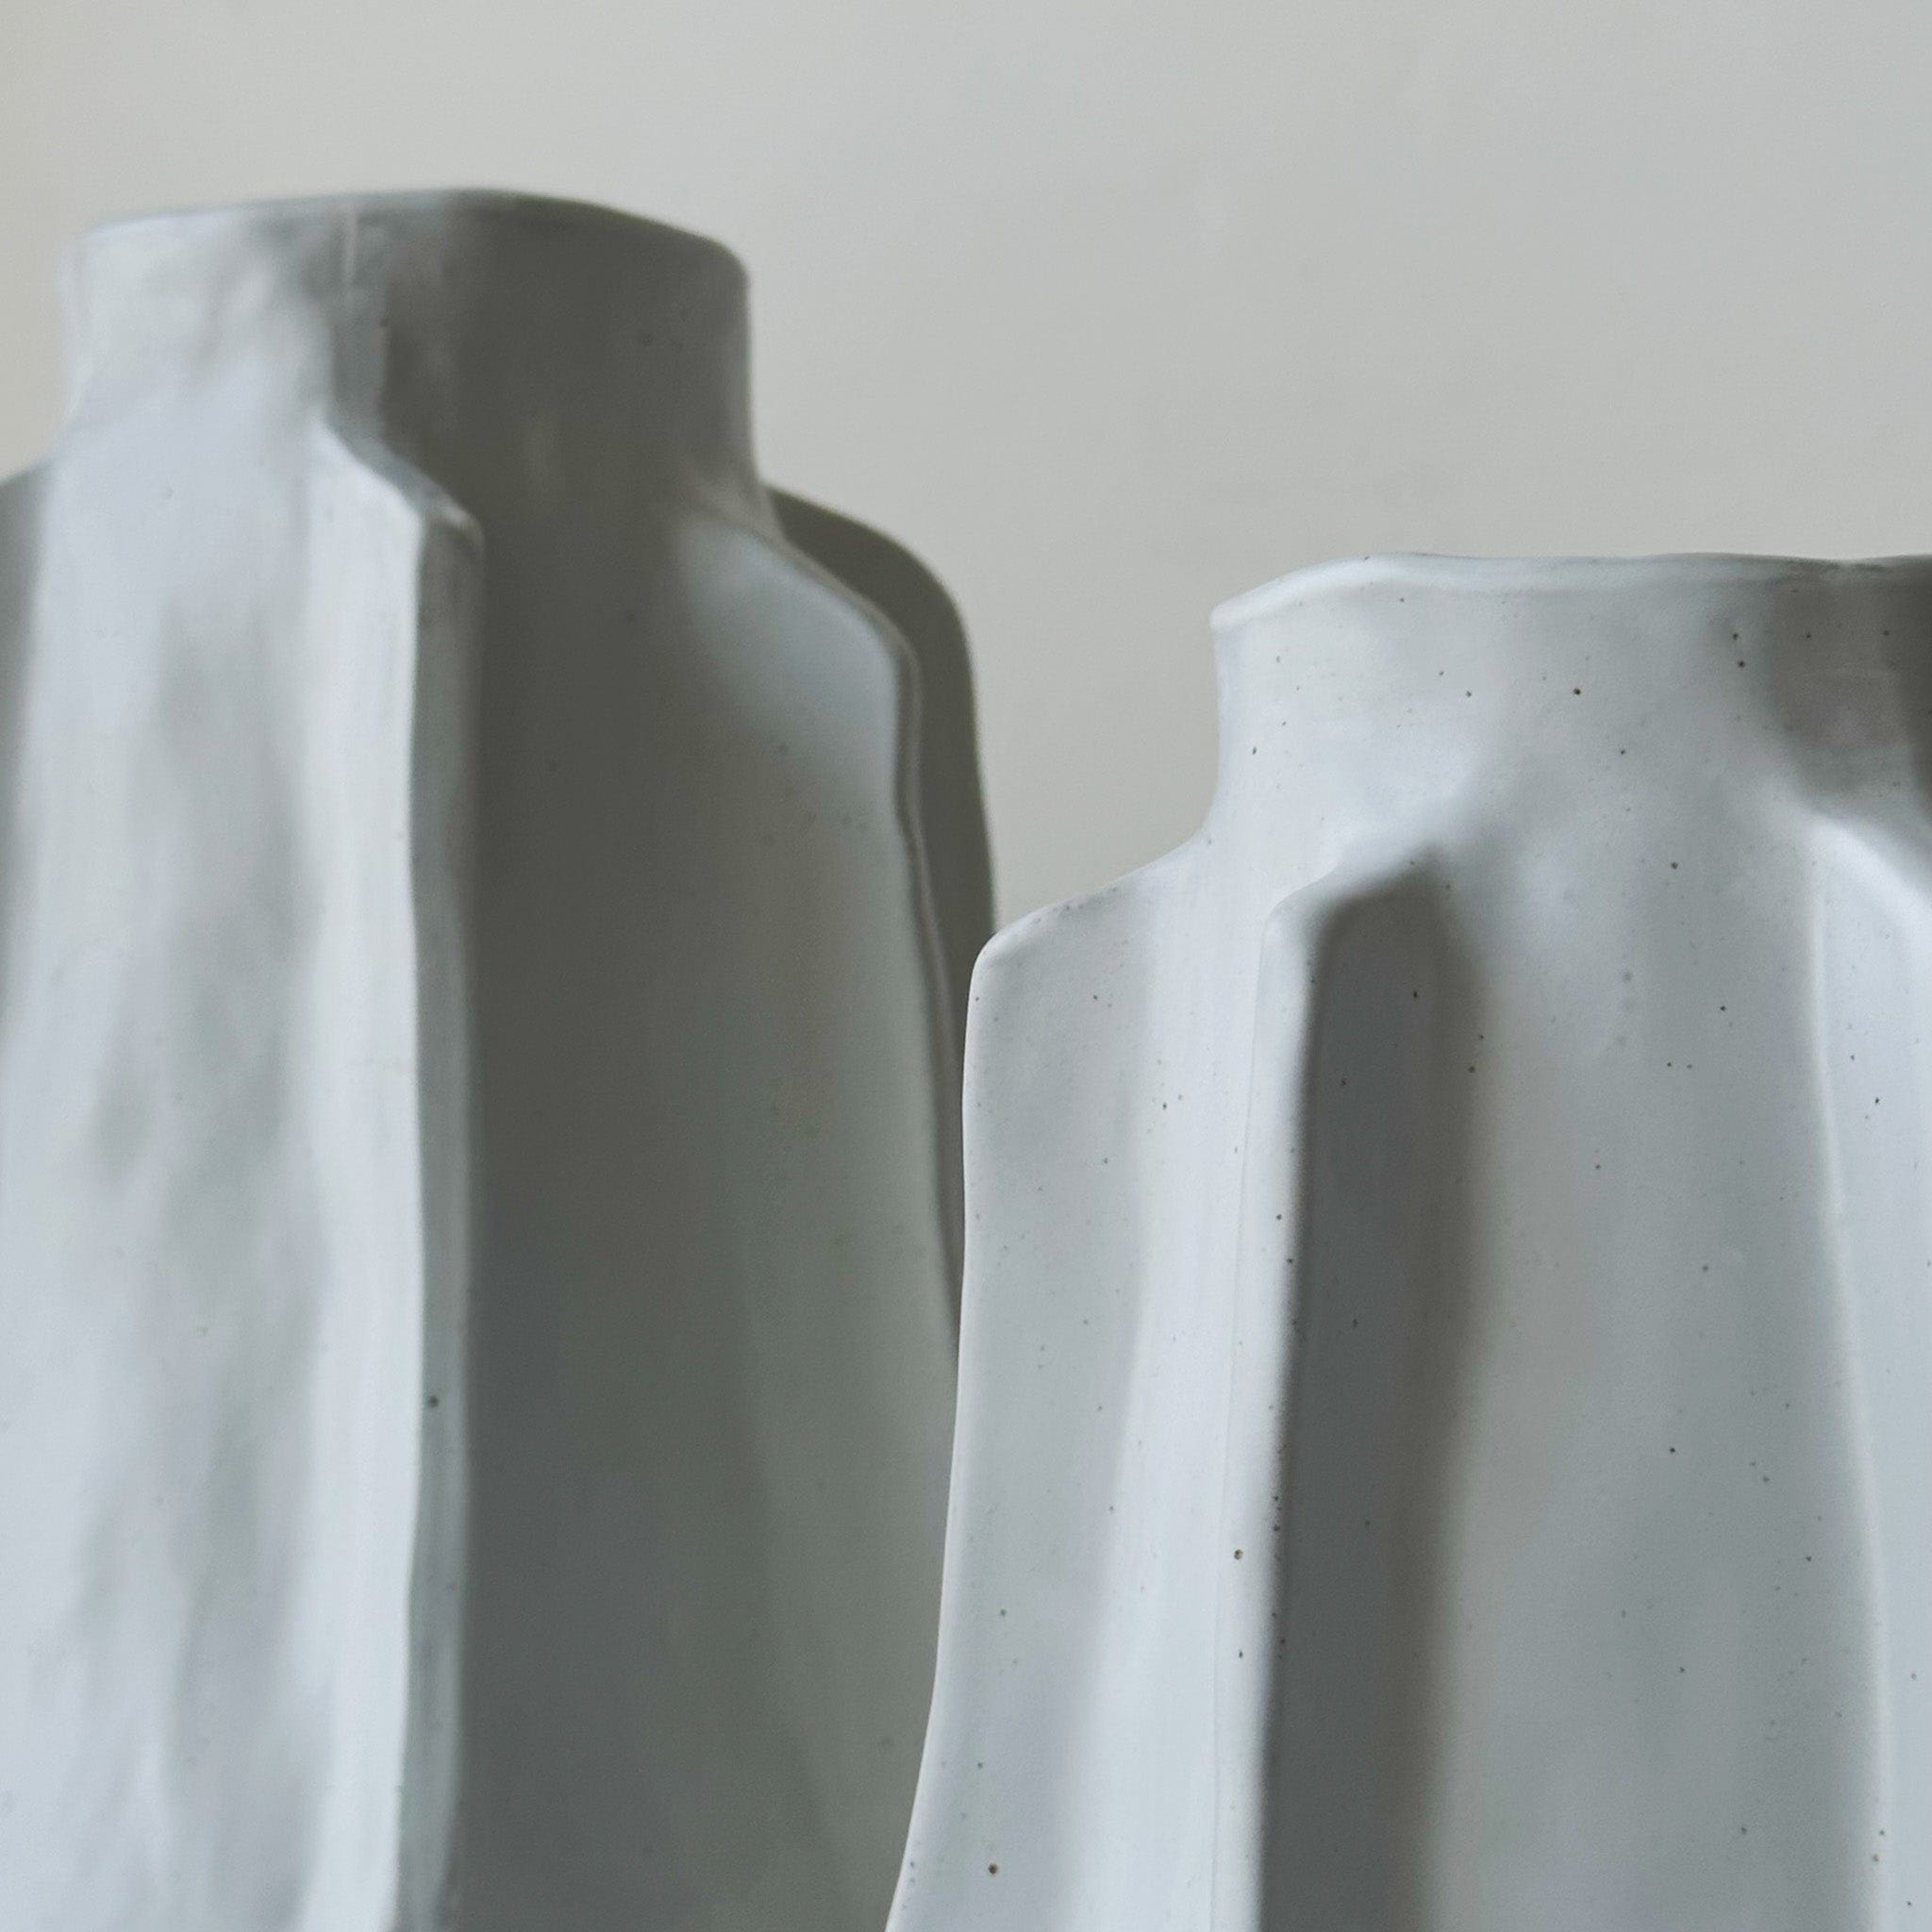 serax Decor The Billy Vase #1 by Marie Michielssen - Small